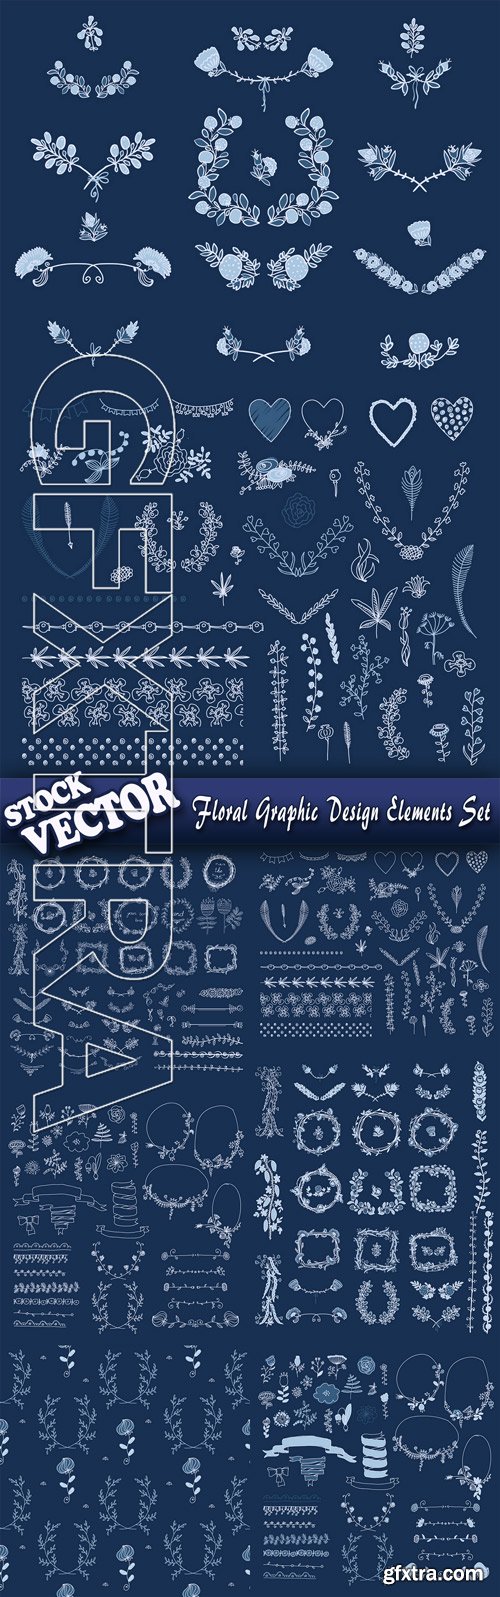 Stock Vector - Floral Graphic Design Elements Set